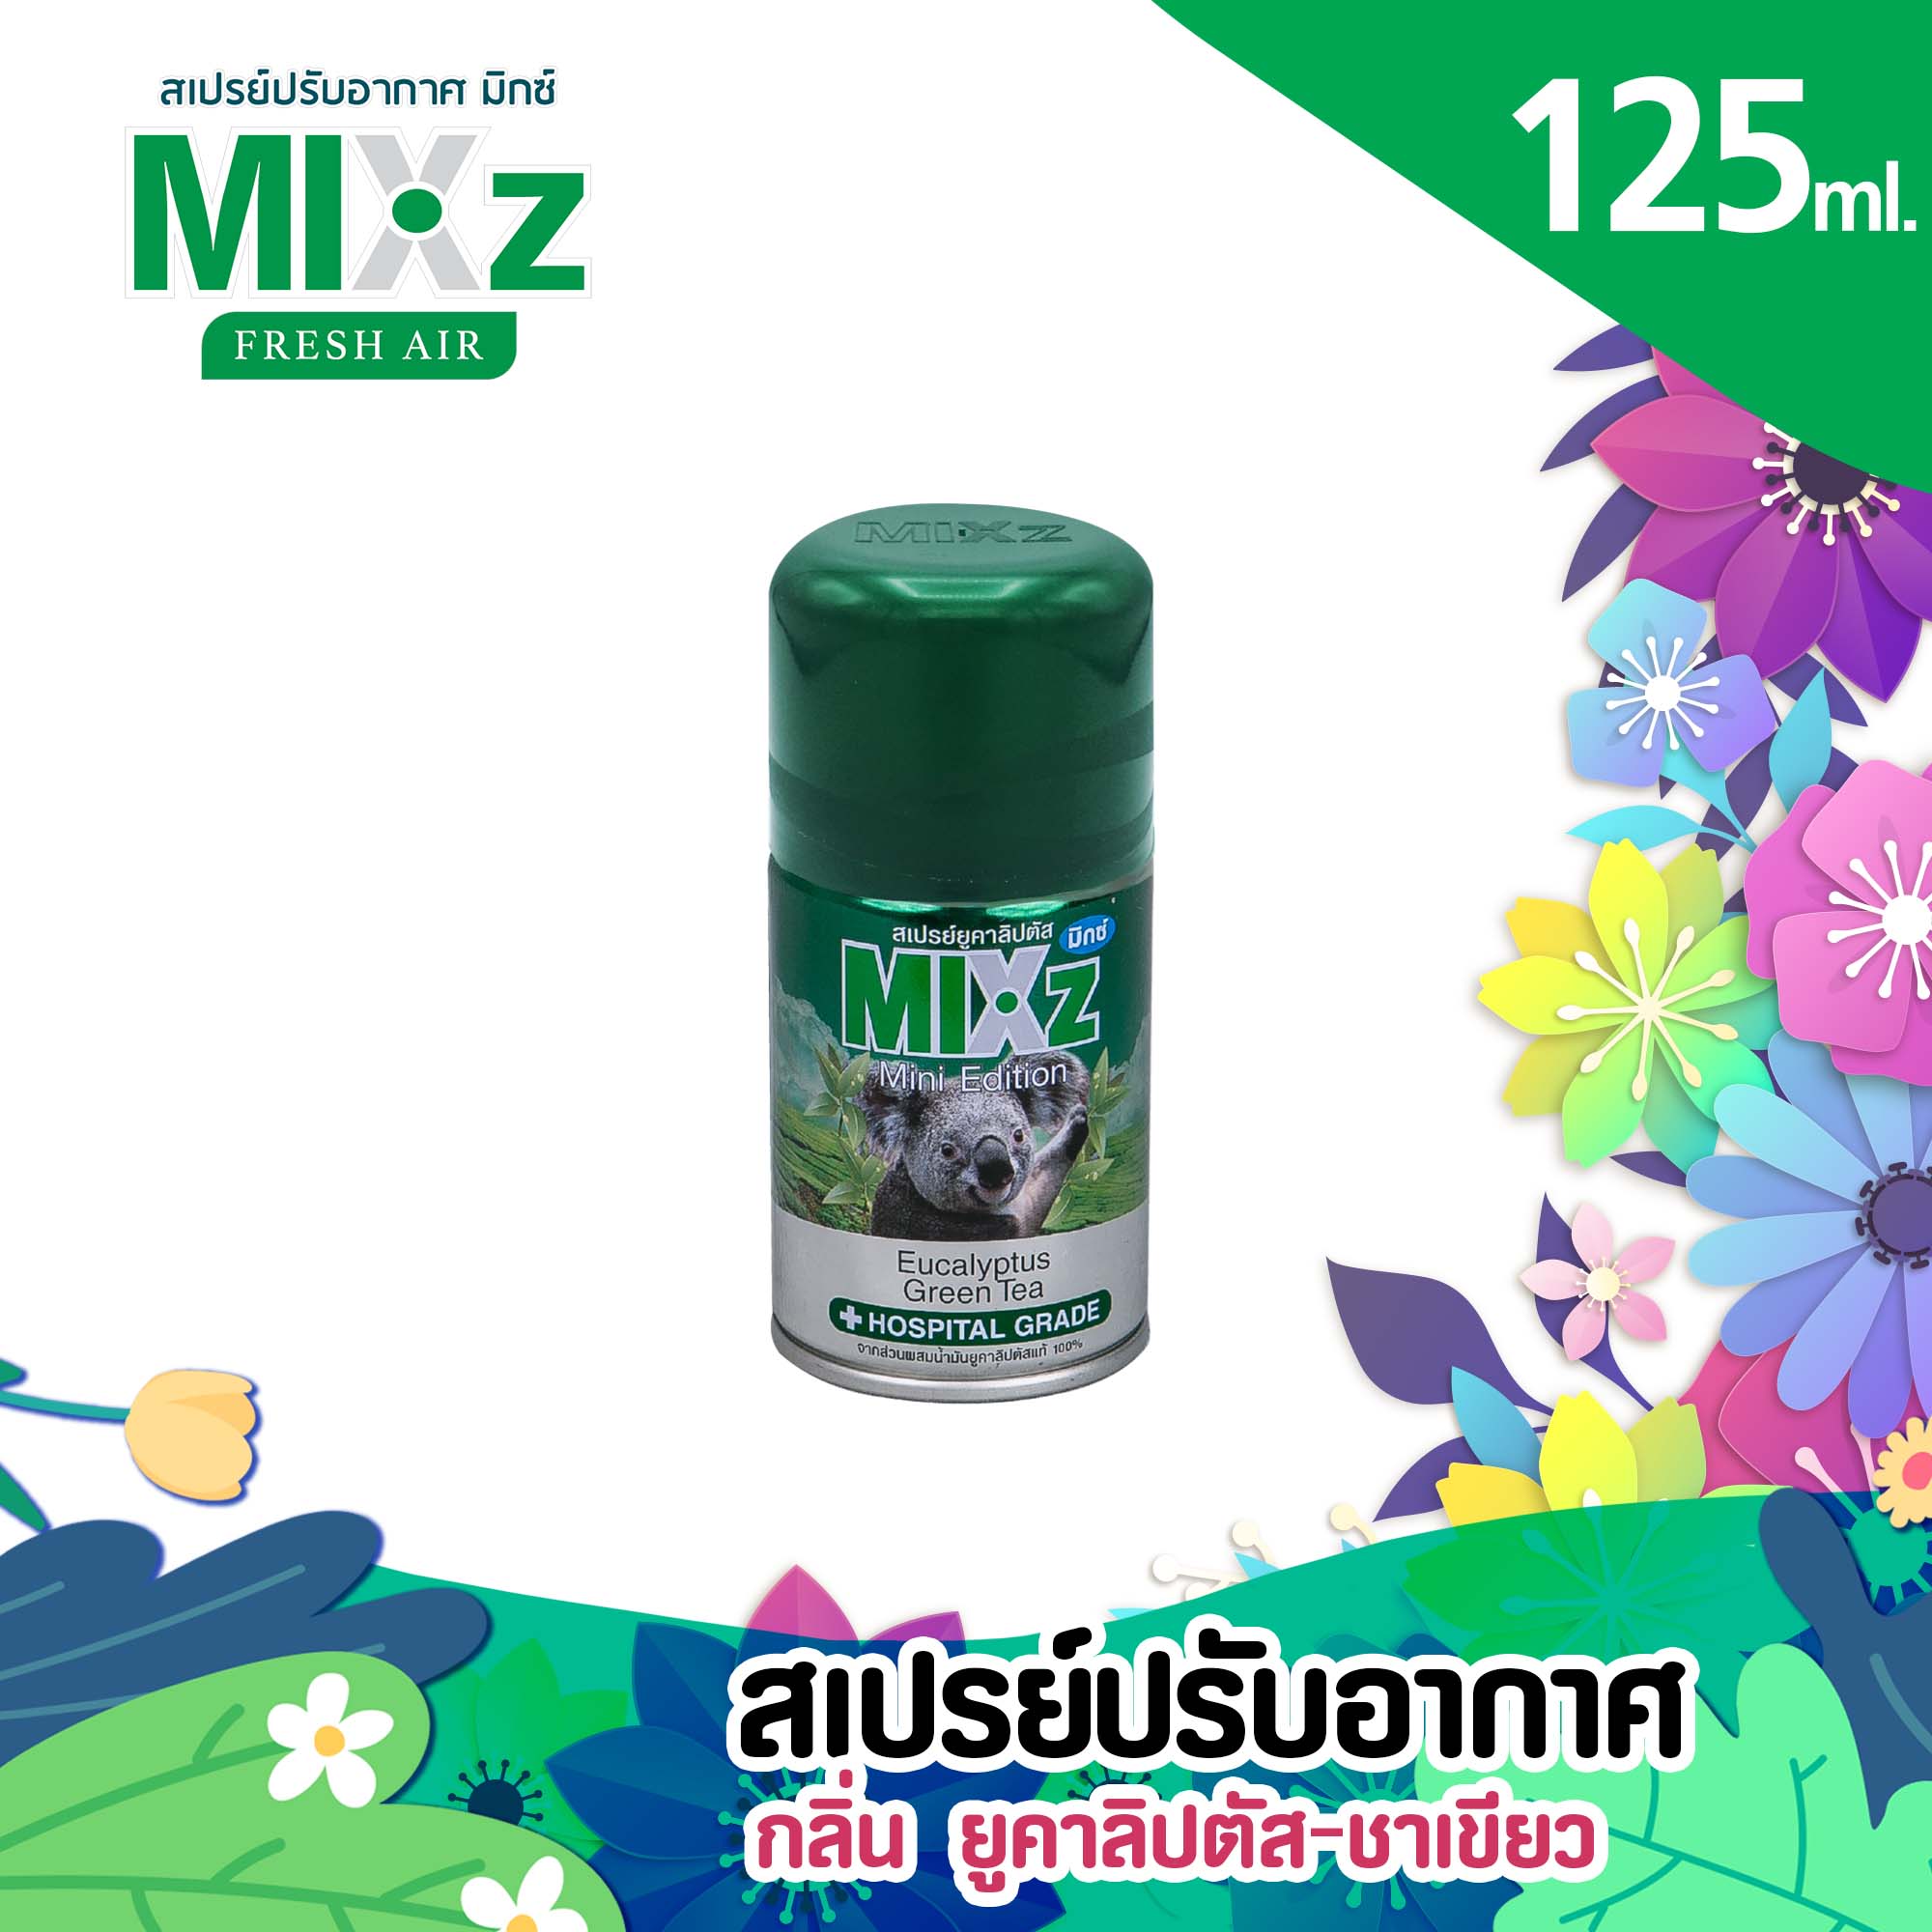 Mixz Mini Edition น้ำหอมสเปรย์ปรับอากาศ กลิ่นยูคาลิปตัส-ชาเขียว 125 ml.